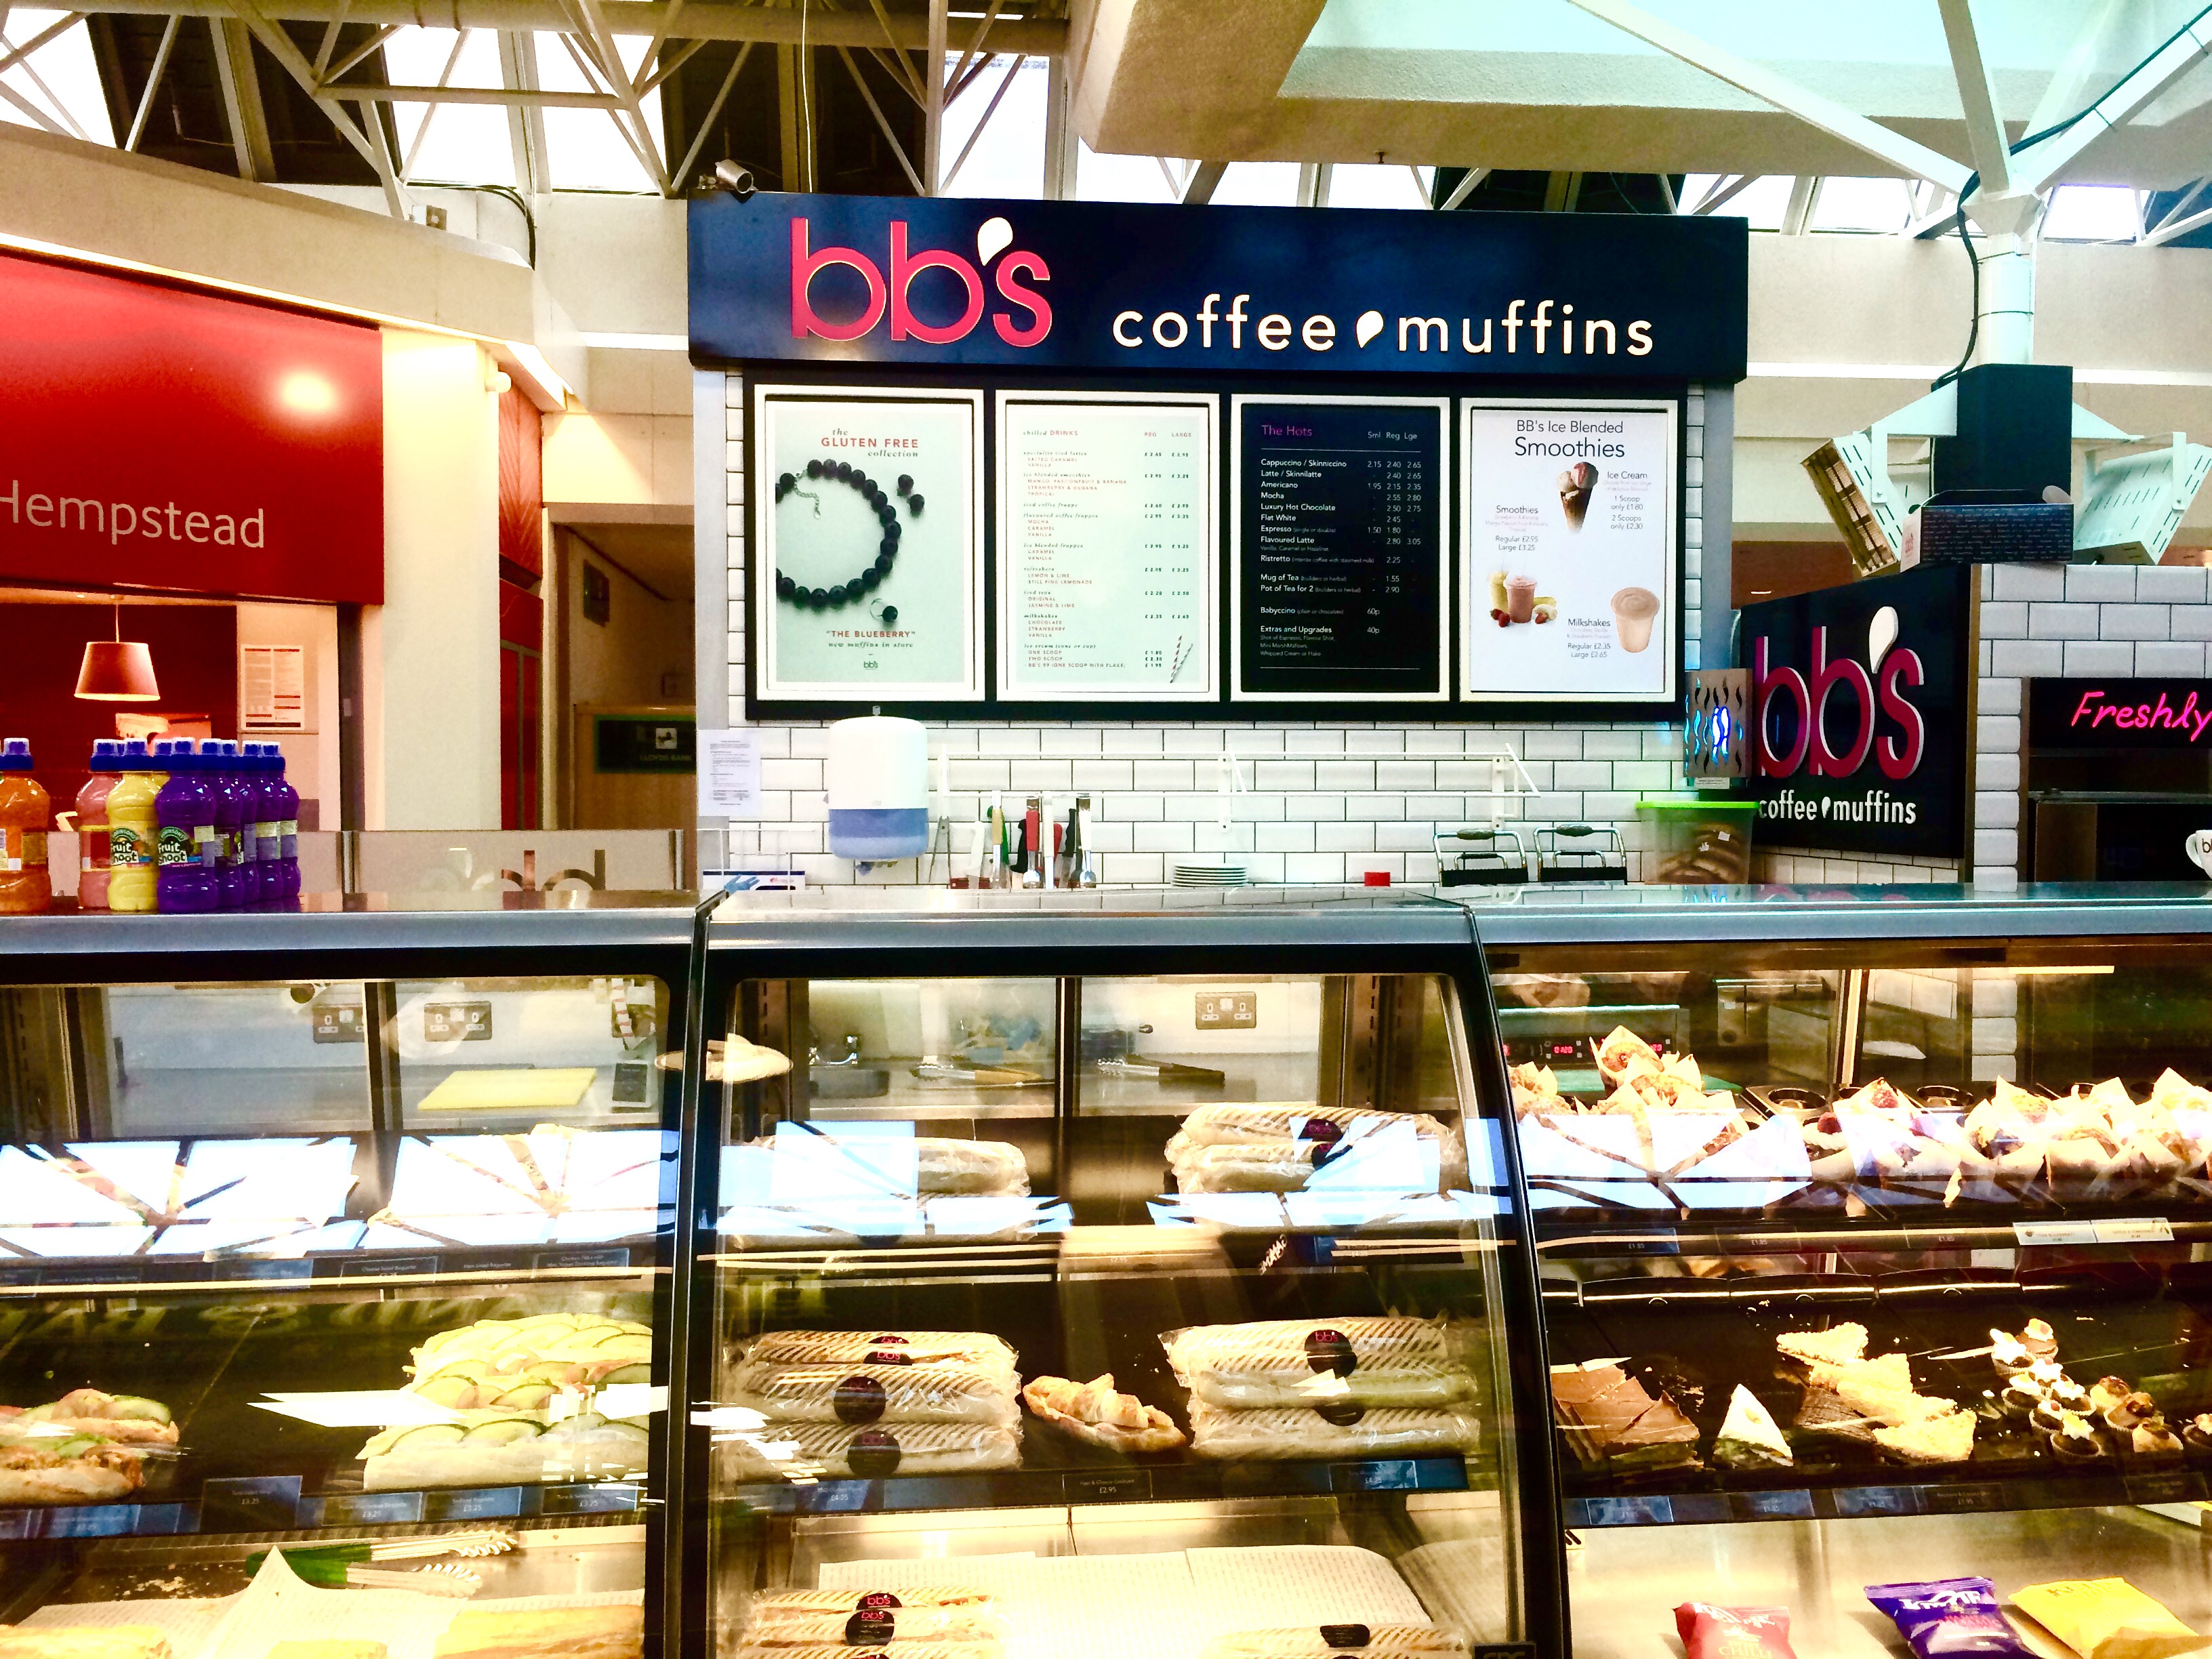 BB'S Coffee & Muffins